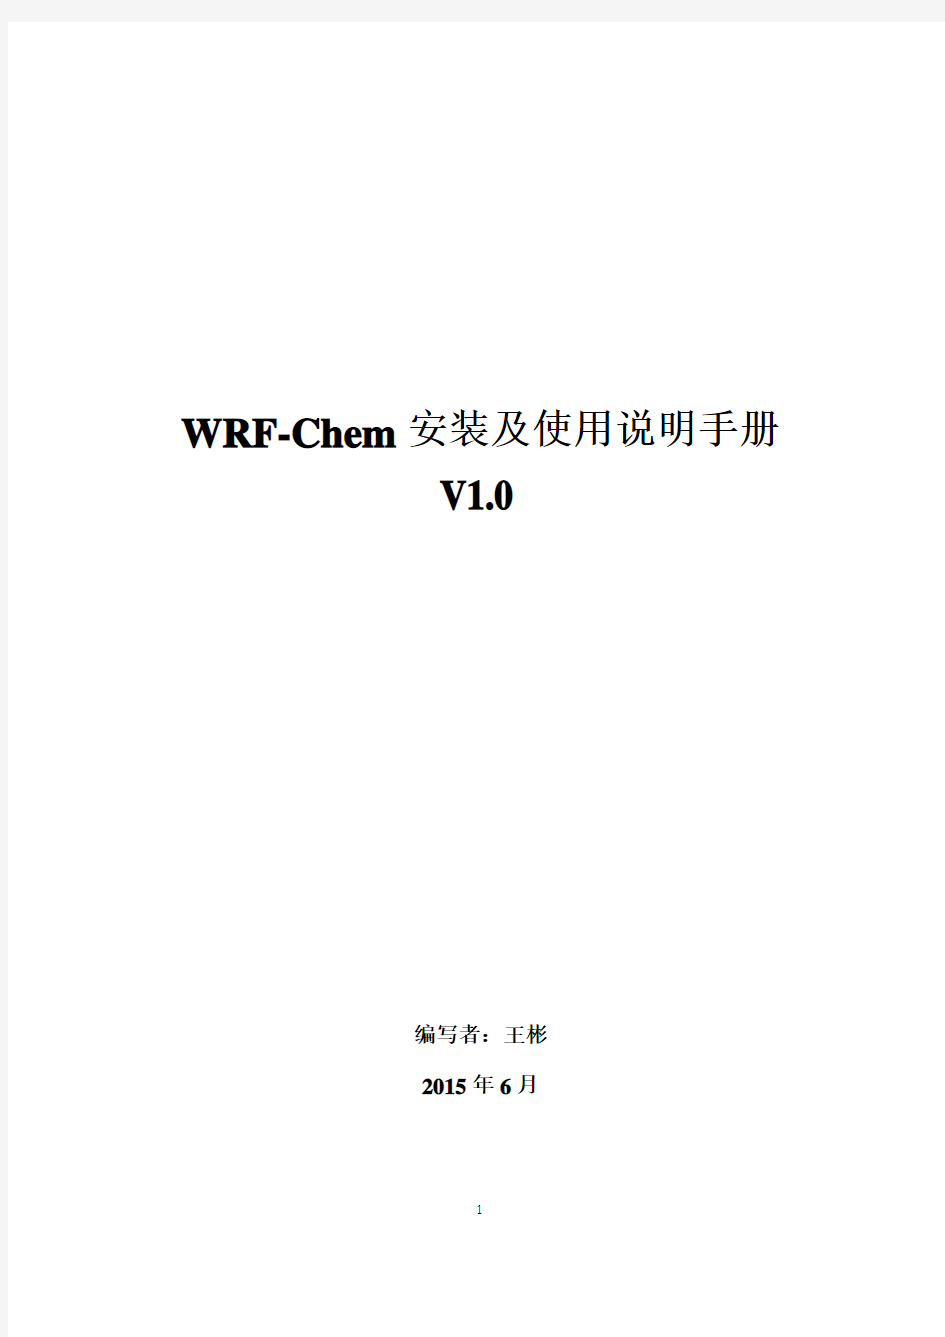 WRFChem安装及使用说明手册